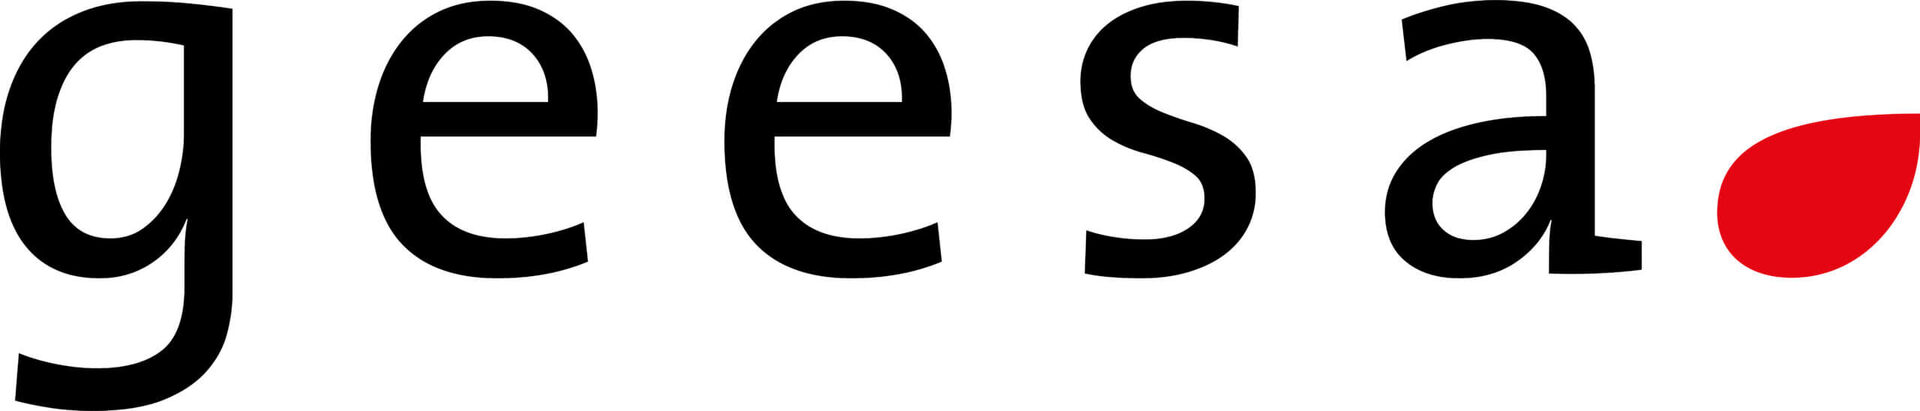 GEESA logo RGB white background-a33e809b